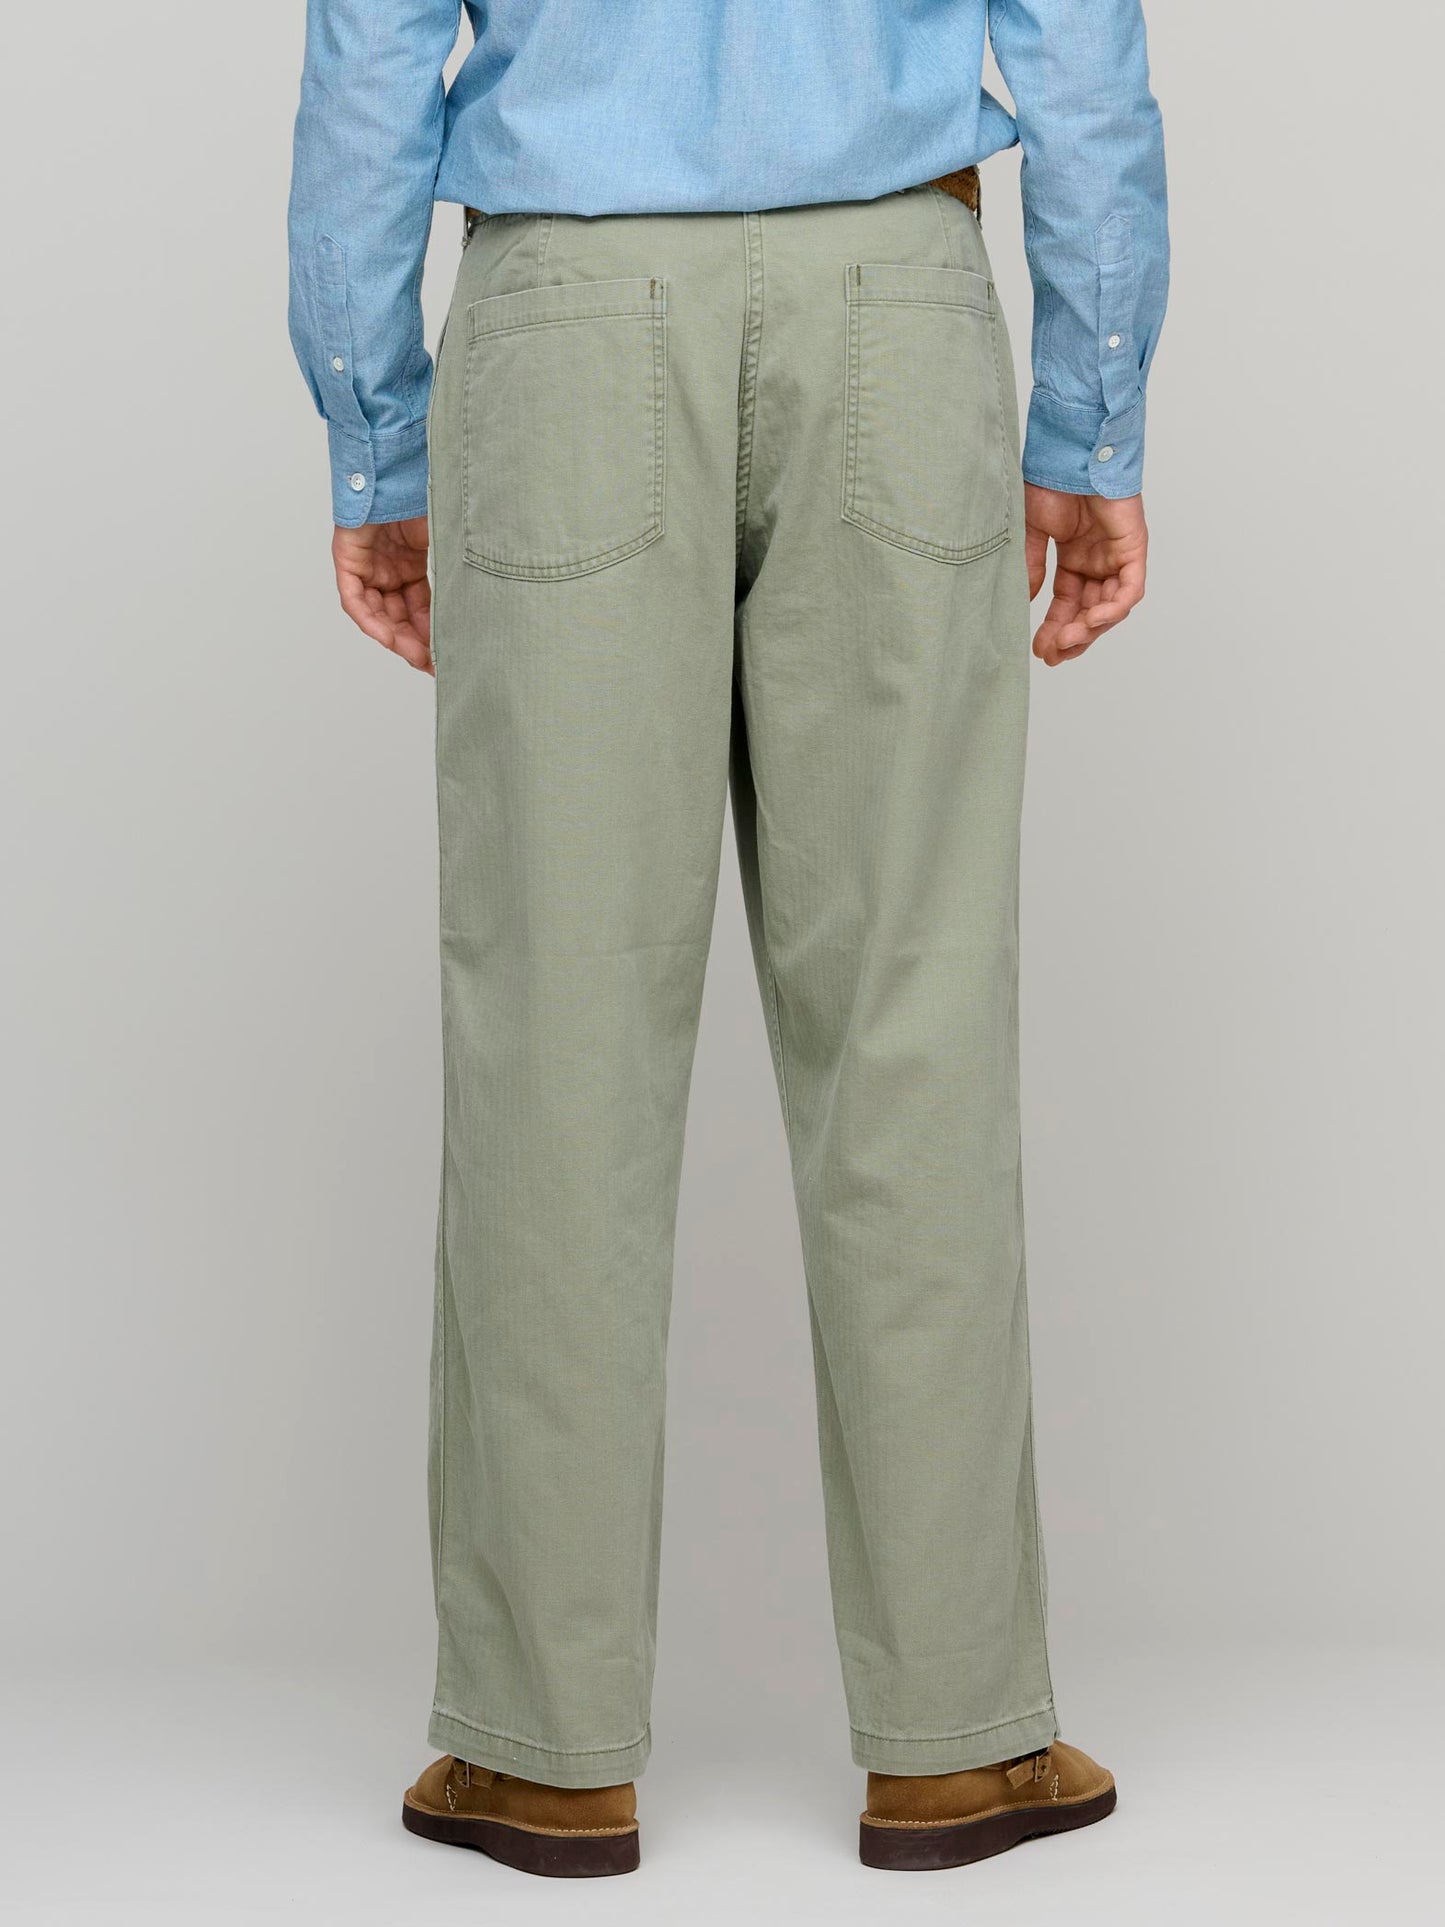 US Army Summer Fatigue Pants Regular, Green